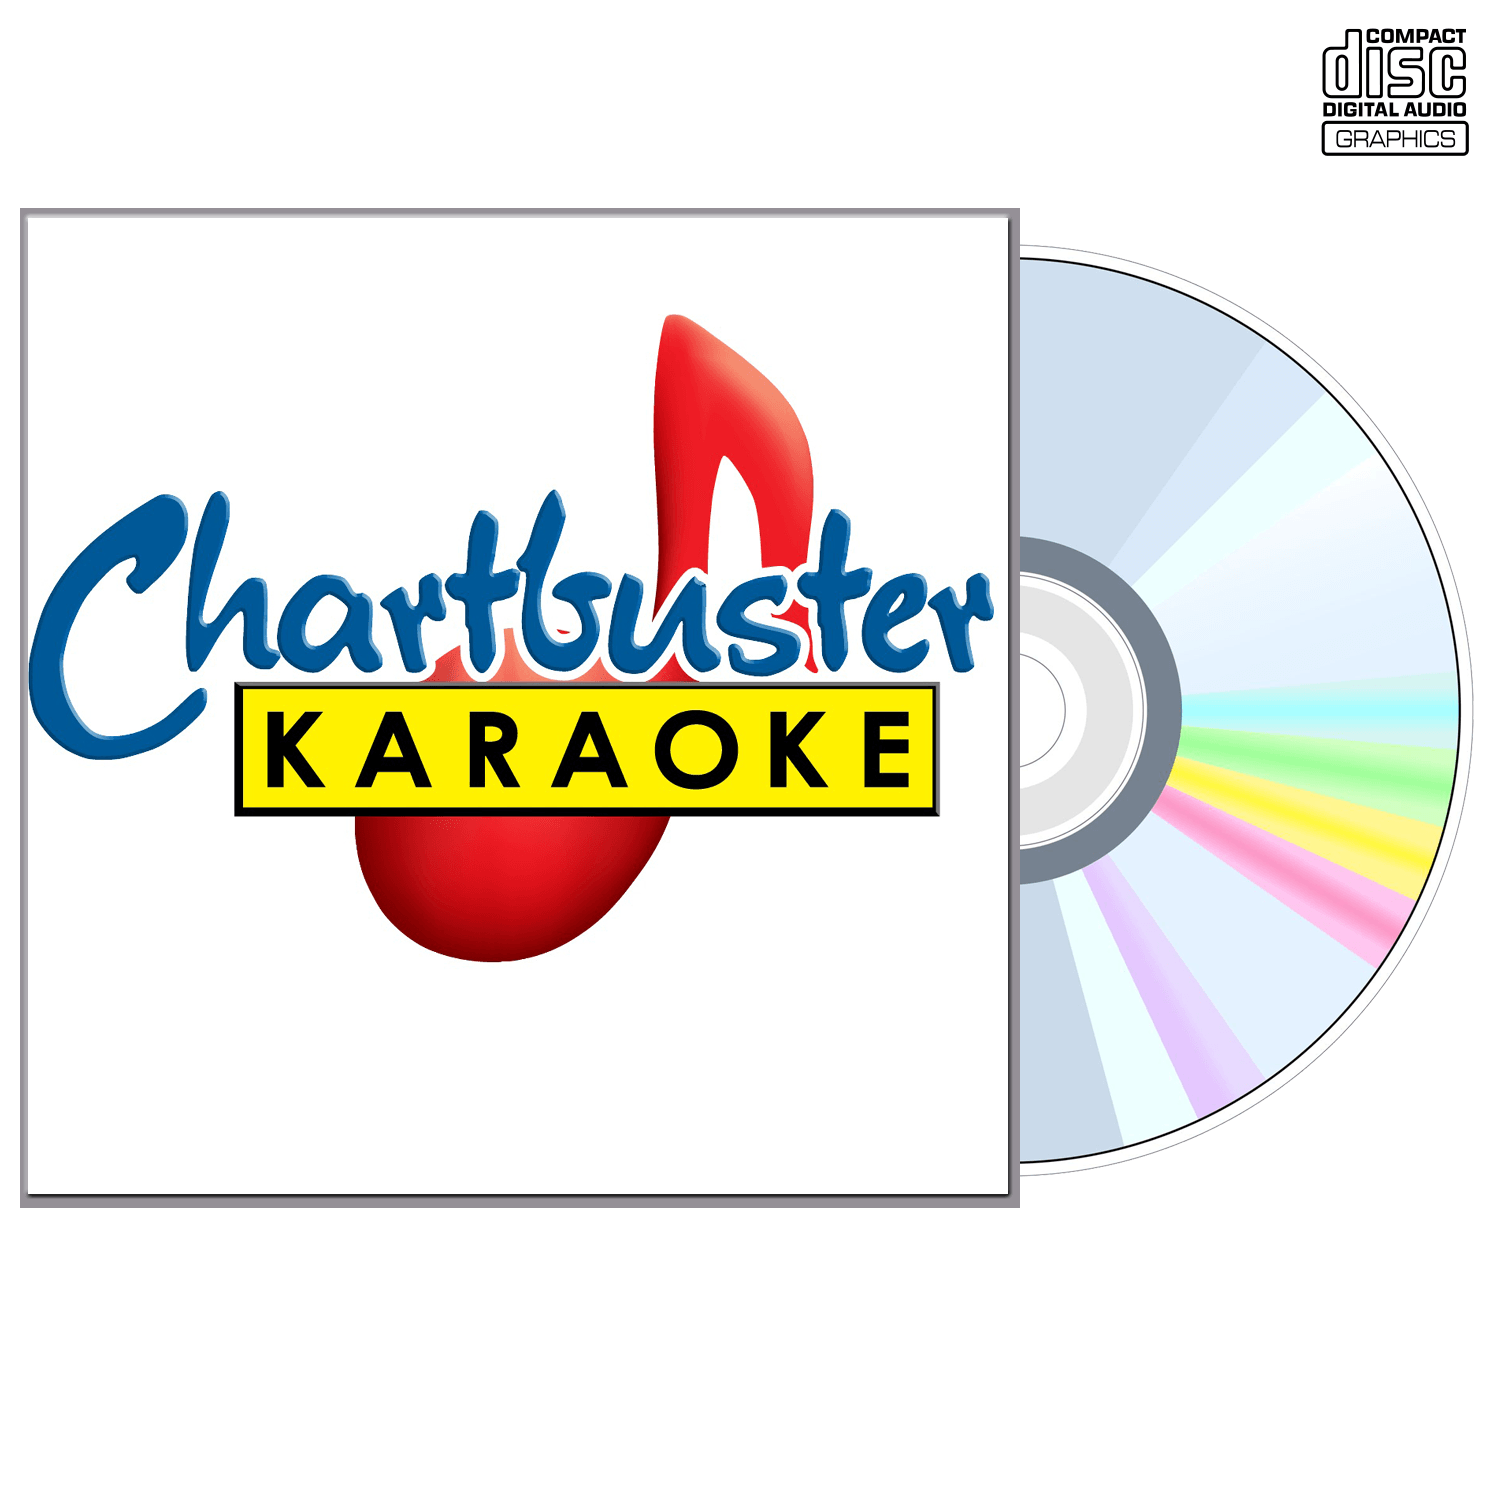 70's Collection Vol 01 - CD+G - Chartbuster Karaoke - Karaoke Home Entertainment